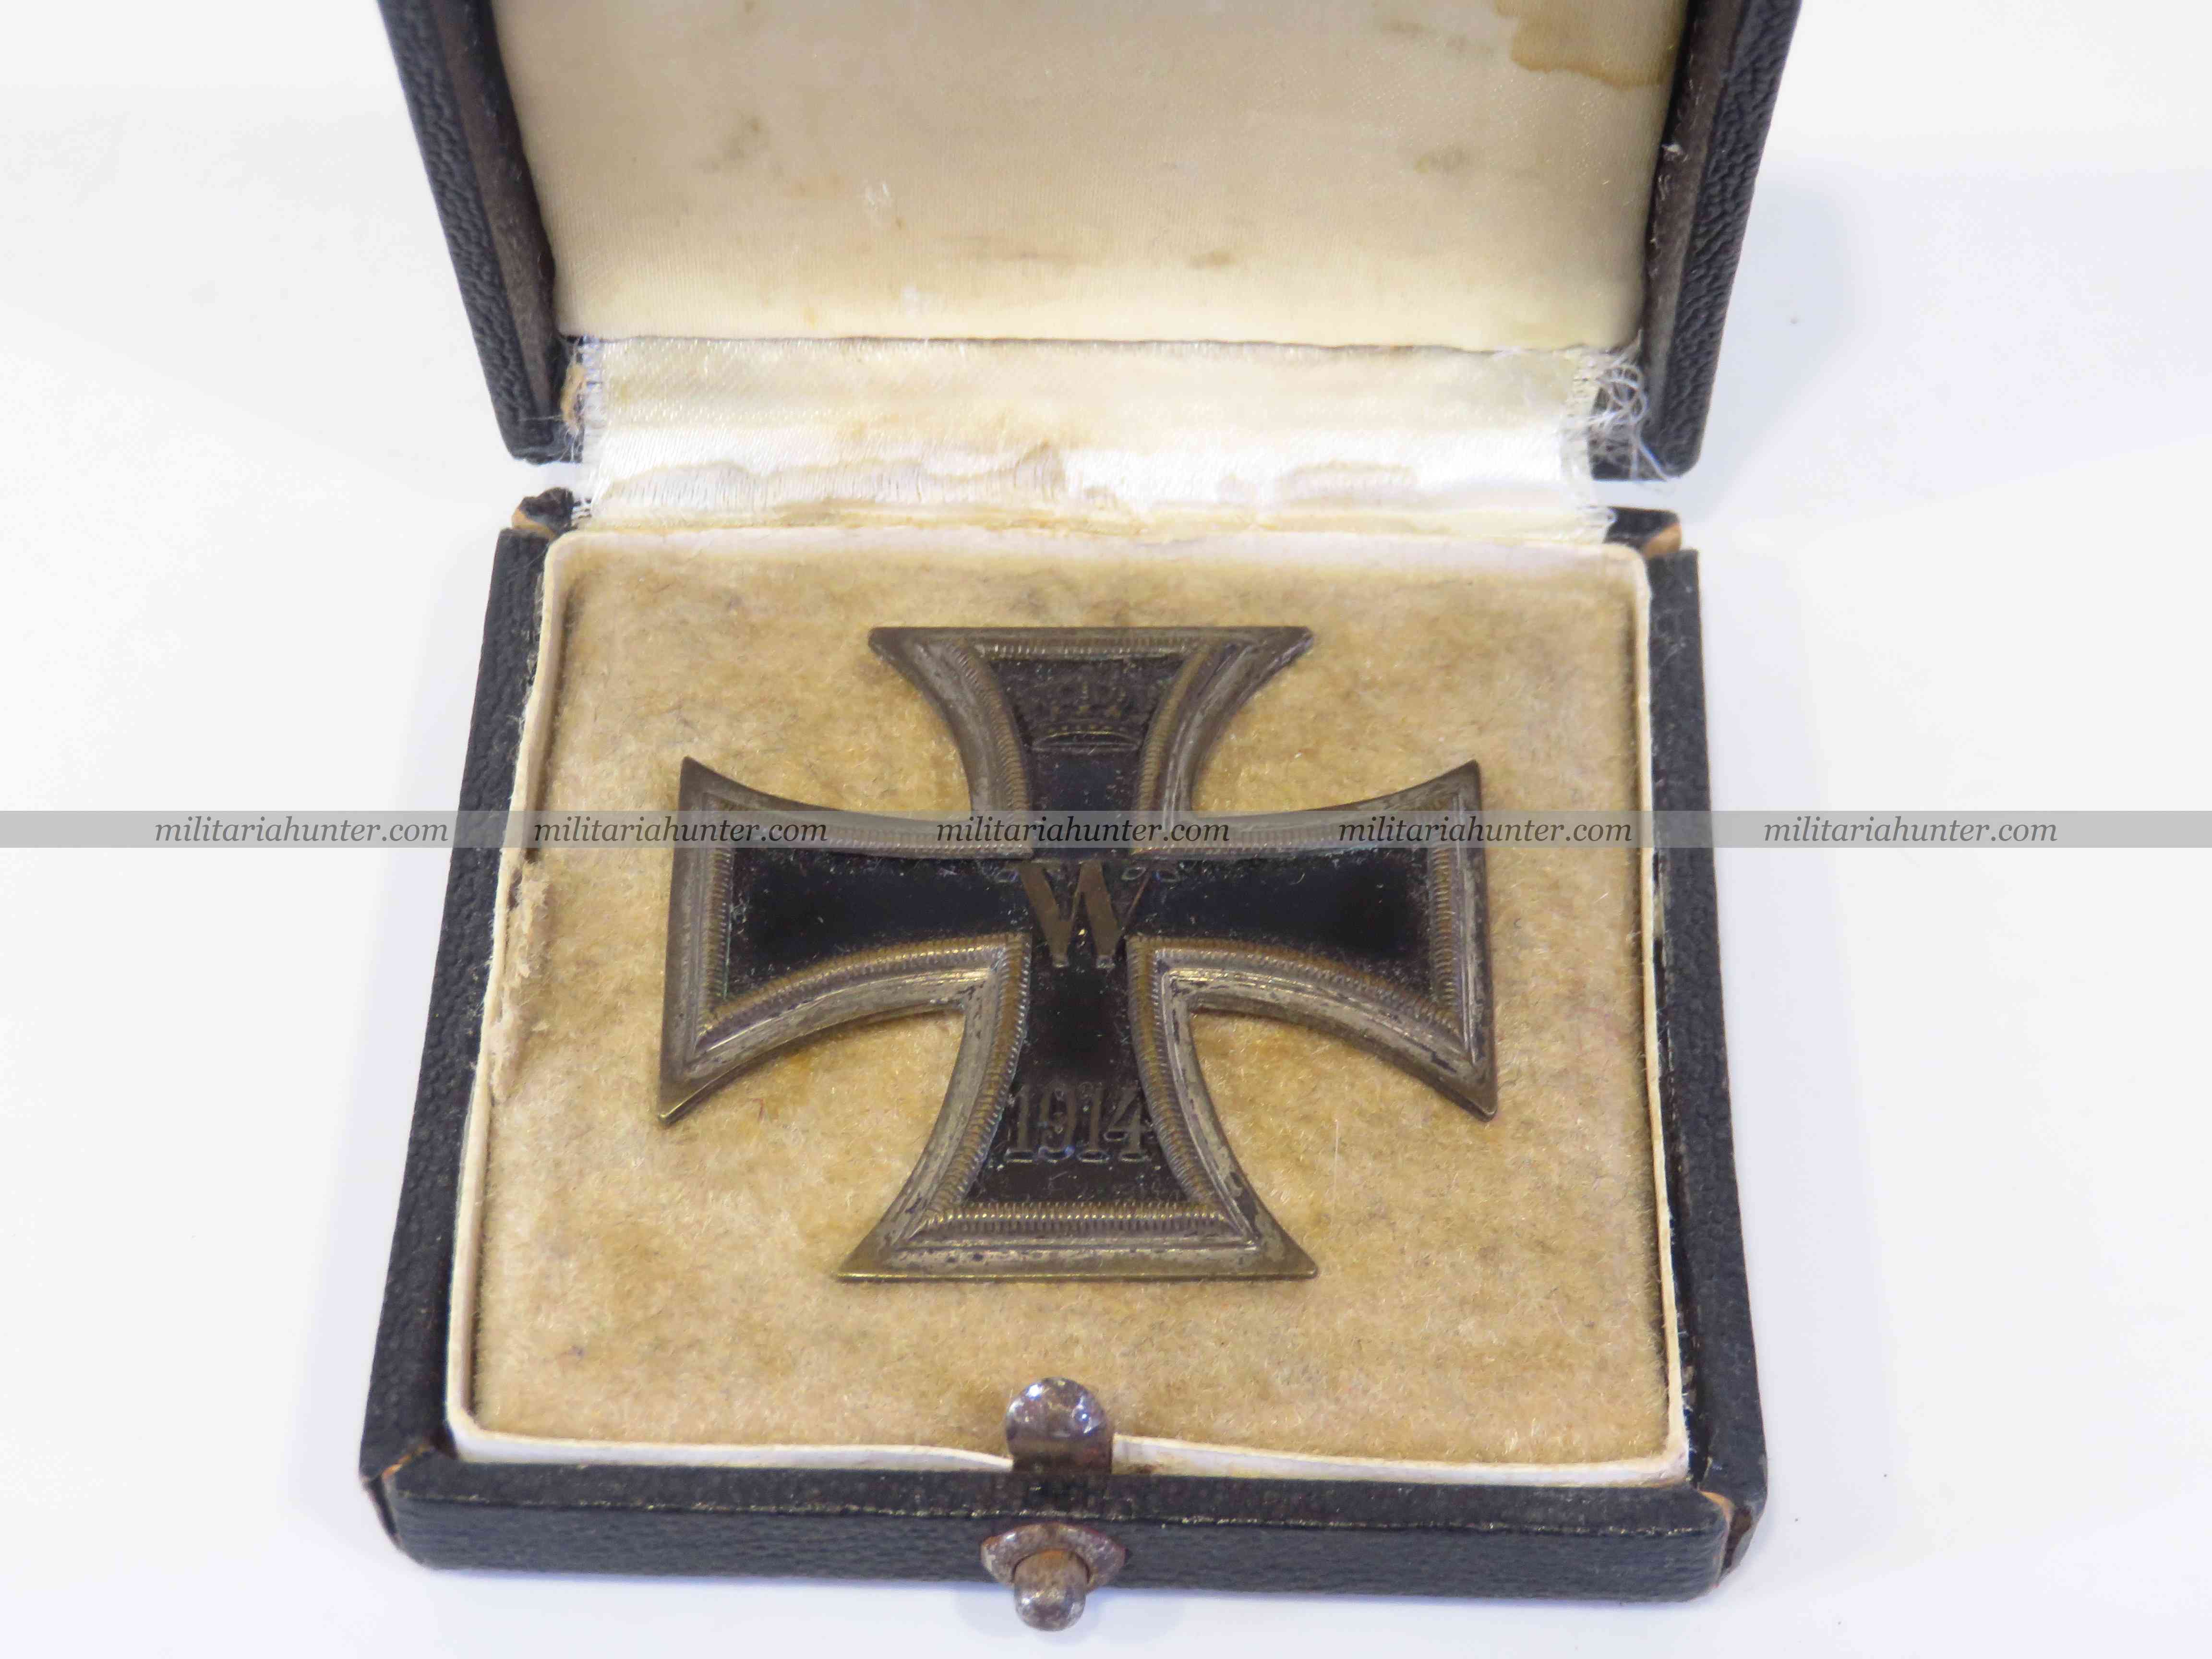 militaria : ww1 german 1st class Iron Cross in case - Croix de Fer 1ère classe 1914 dans son